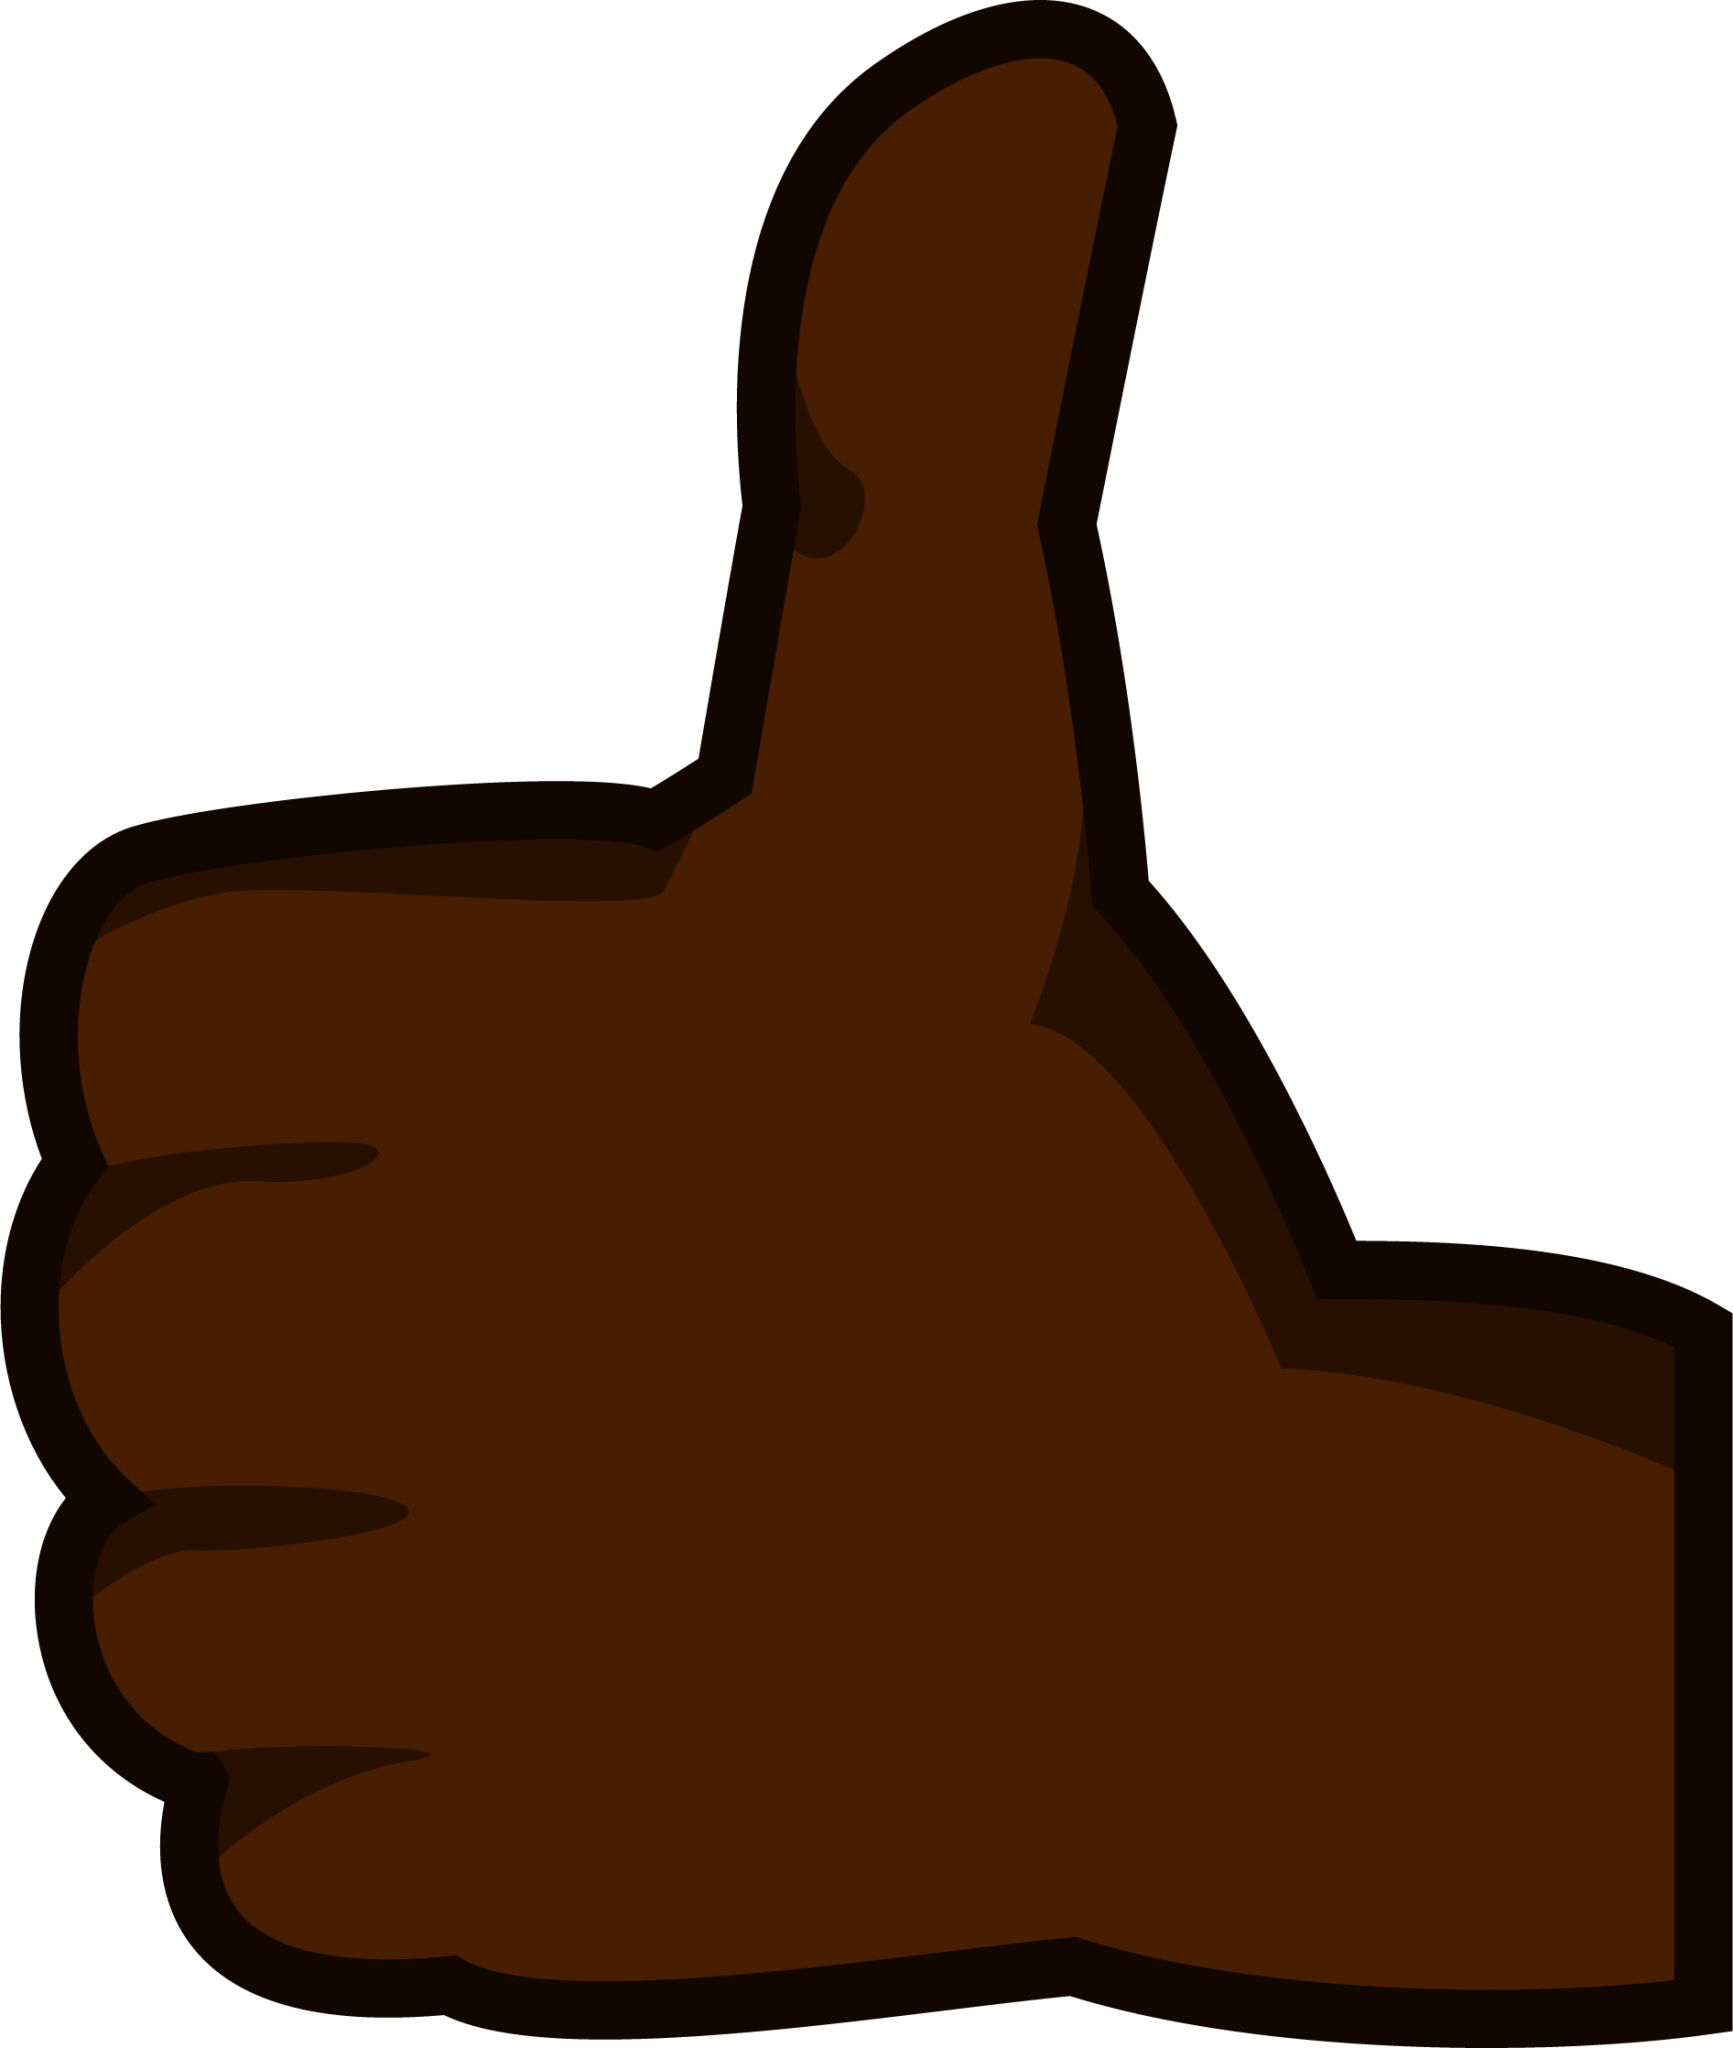 👍 Thumbs up emojis 👍🏻👍🏼👍🏽👍🏾👍🏿